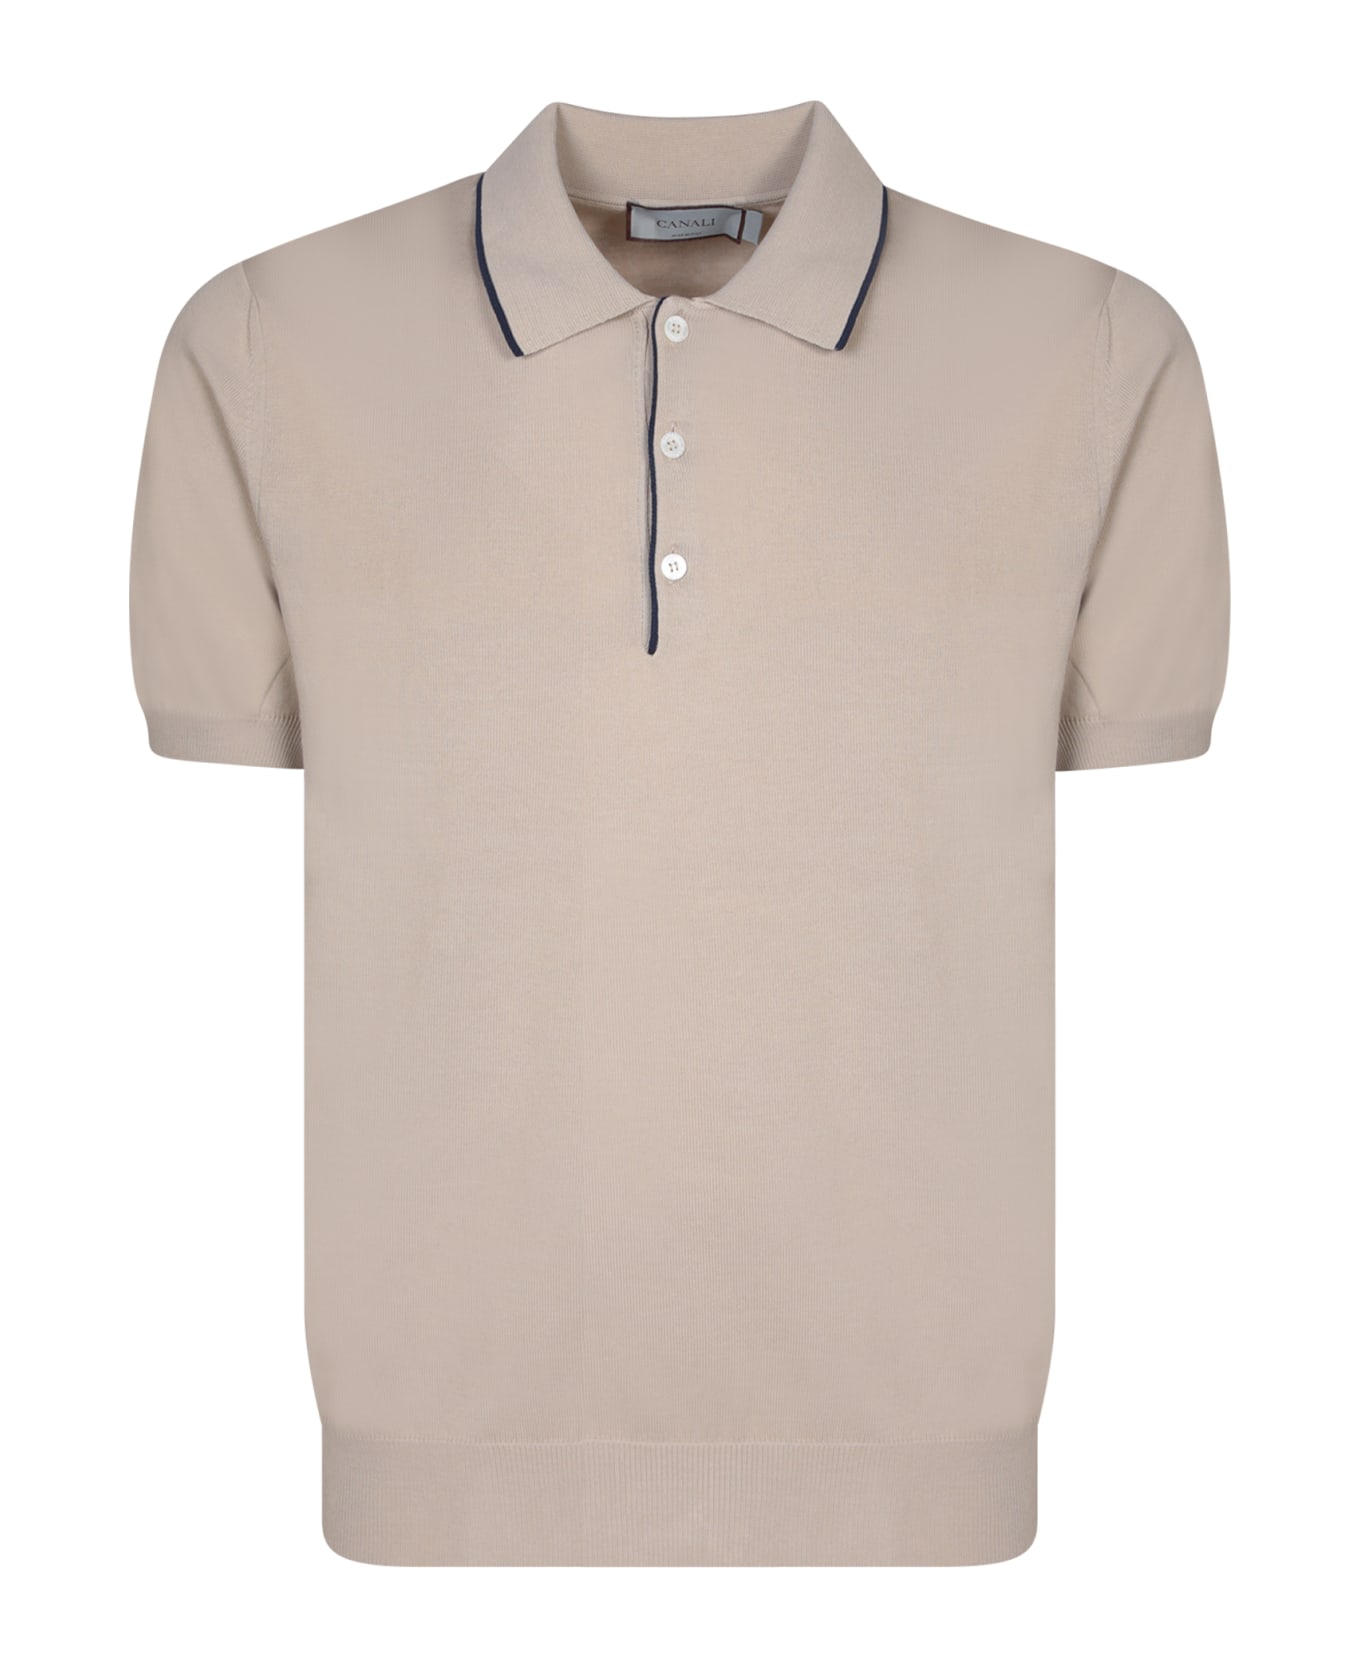 Canali Edges Blue/beige Polo Shirt - Beige ポロシャツ